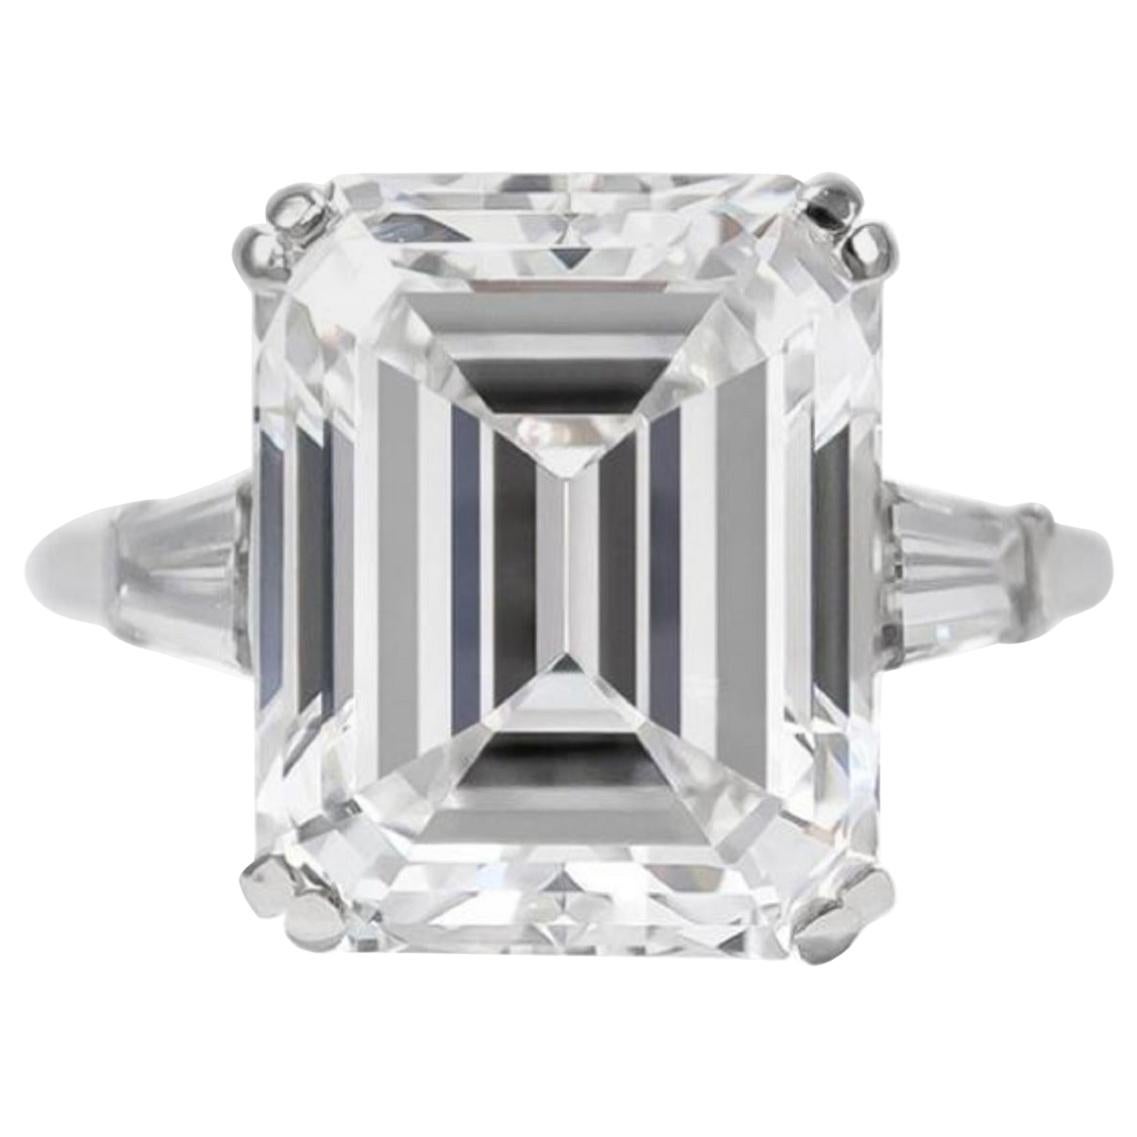 GIA Certified 2.51 Carat Emerald Cut Diamond Platinum Ring D Color Flawless